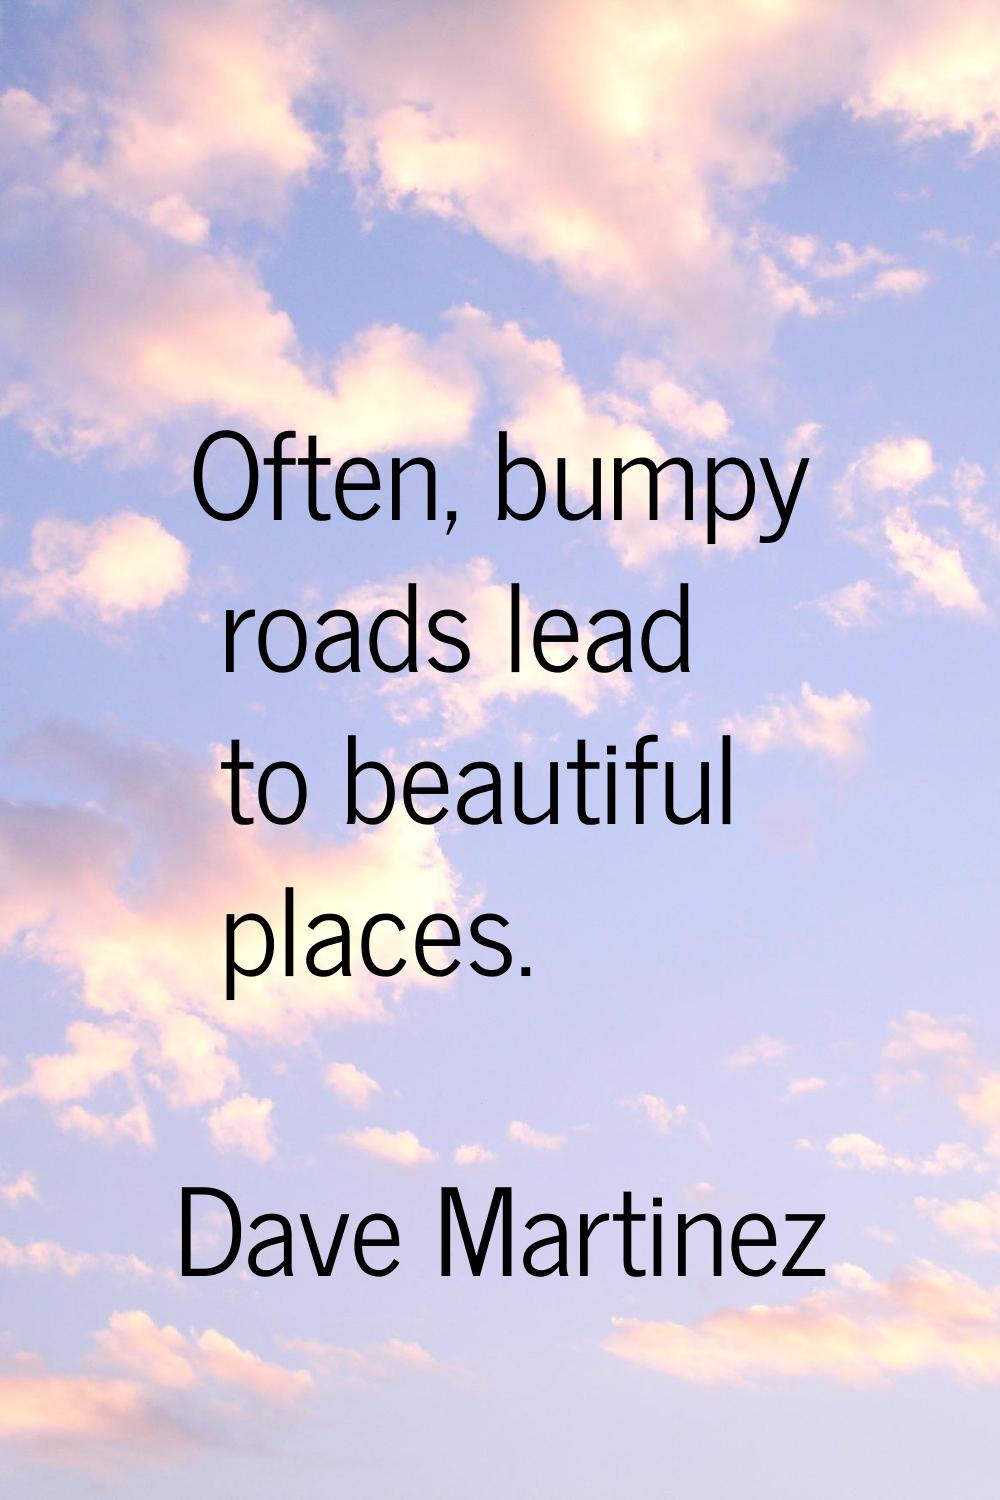 Often, bumpy roads lead to beautiful places.